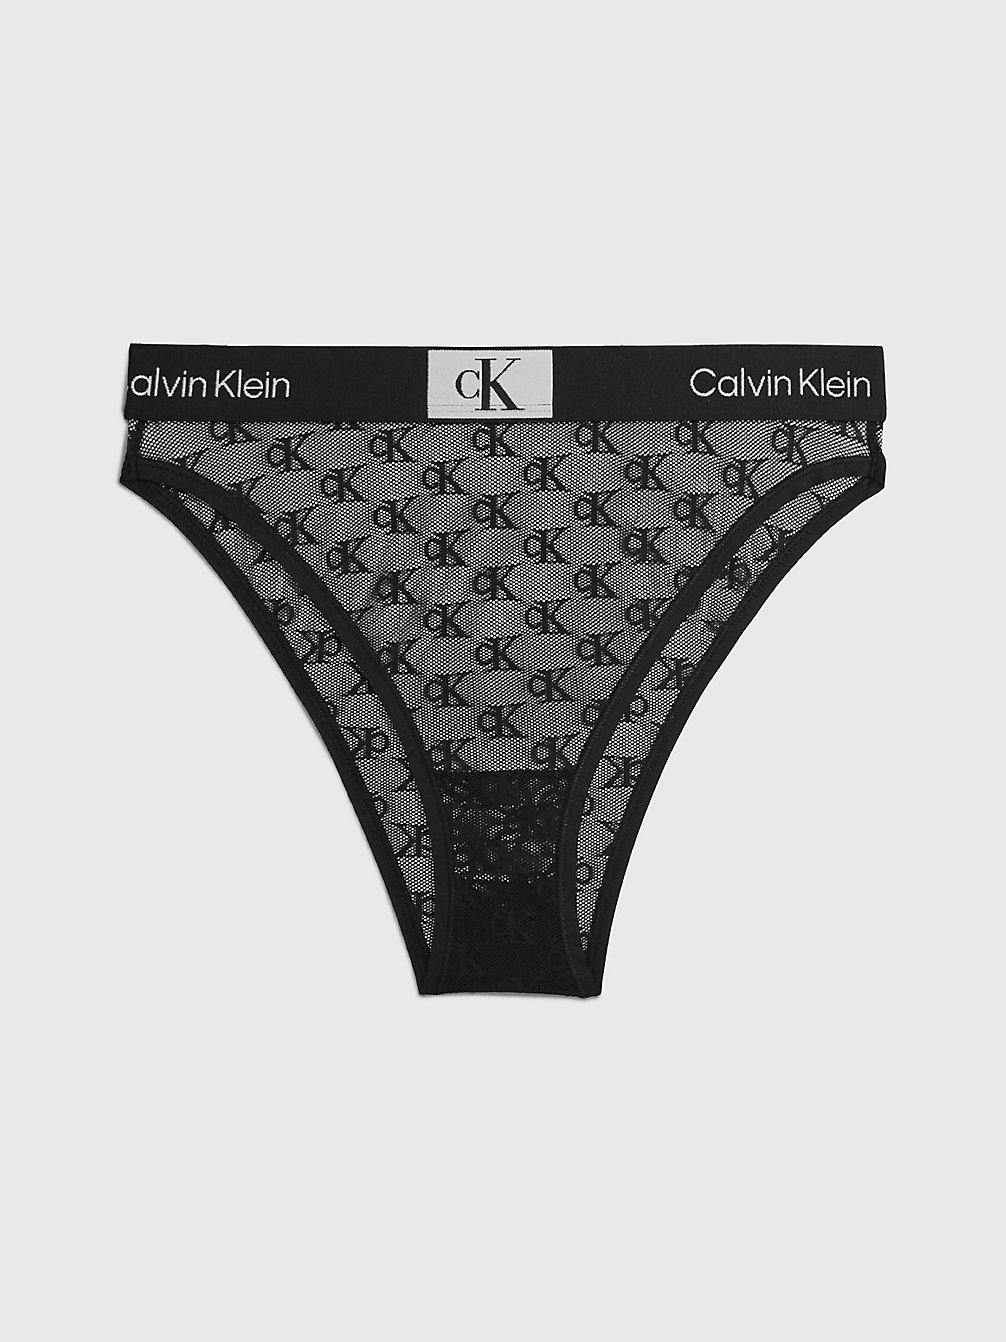 BLACK > Koronkowe Brazyliany - Ck96 > undefined Kobiety - Calvin Klein